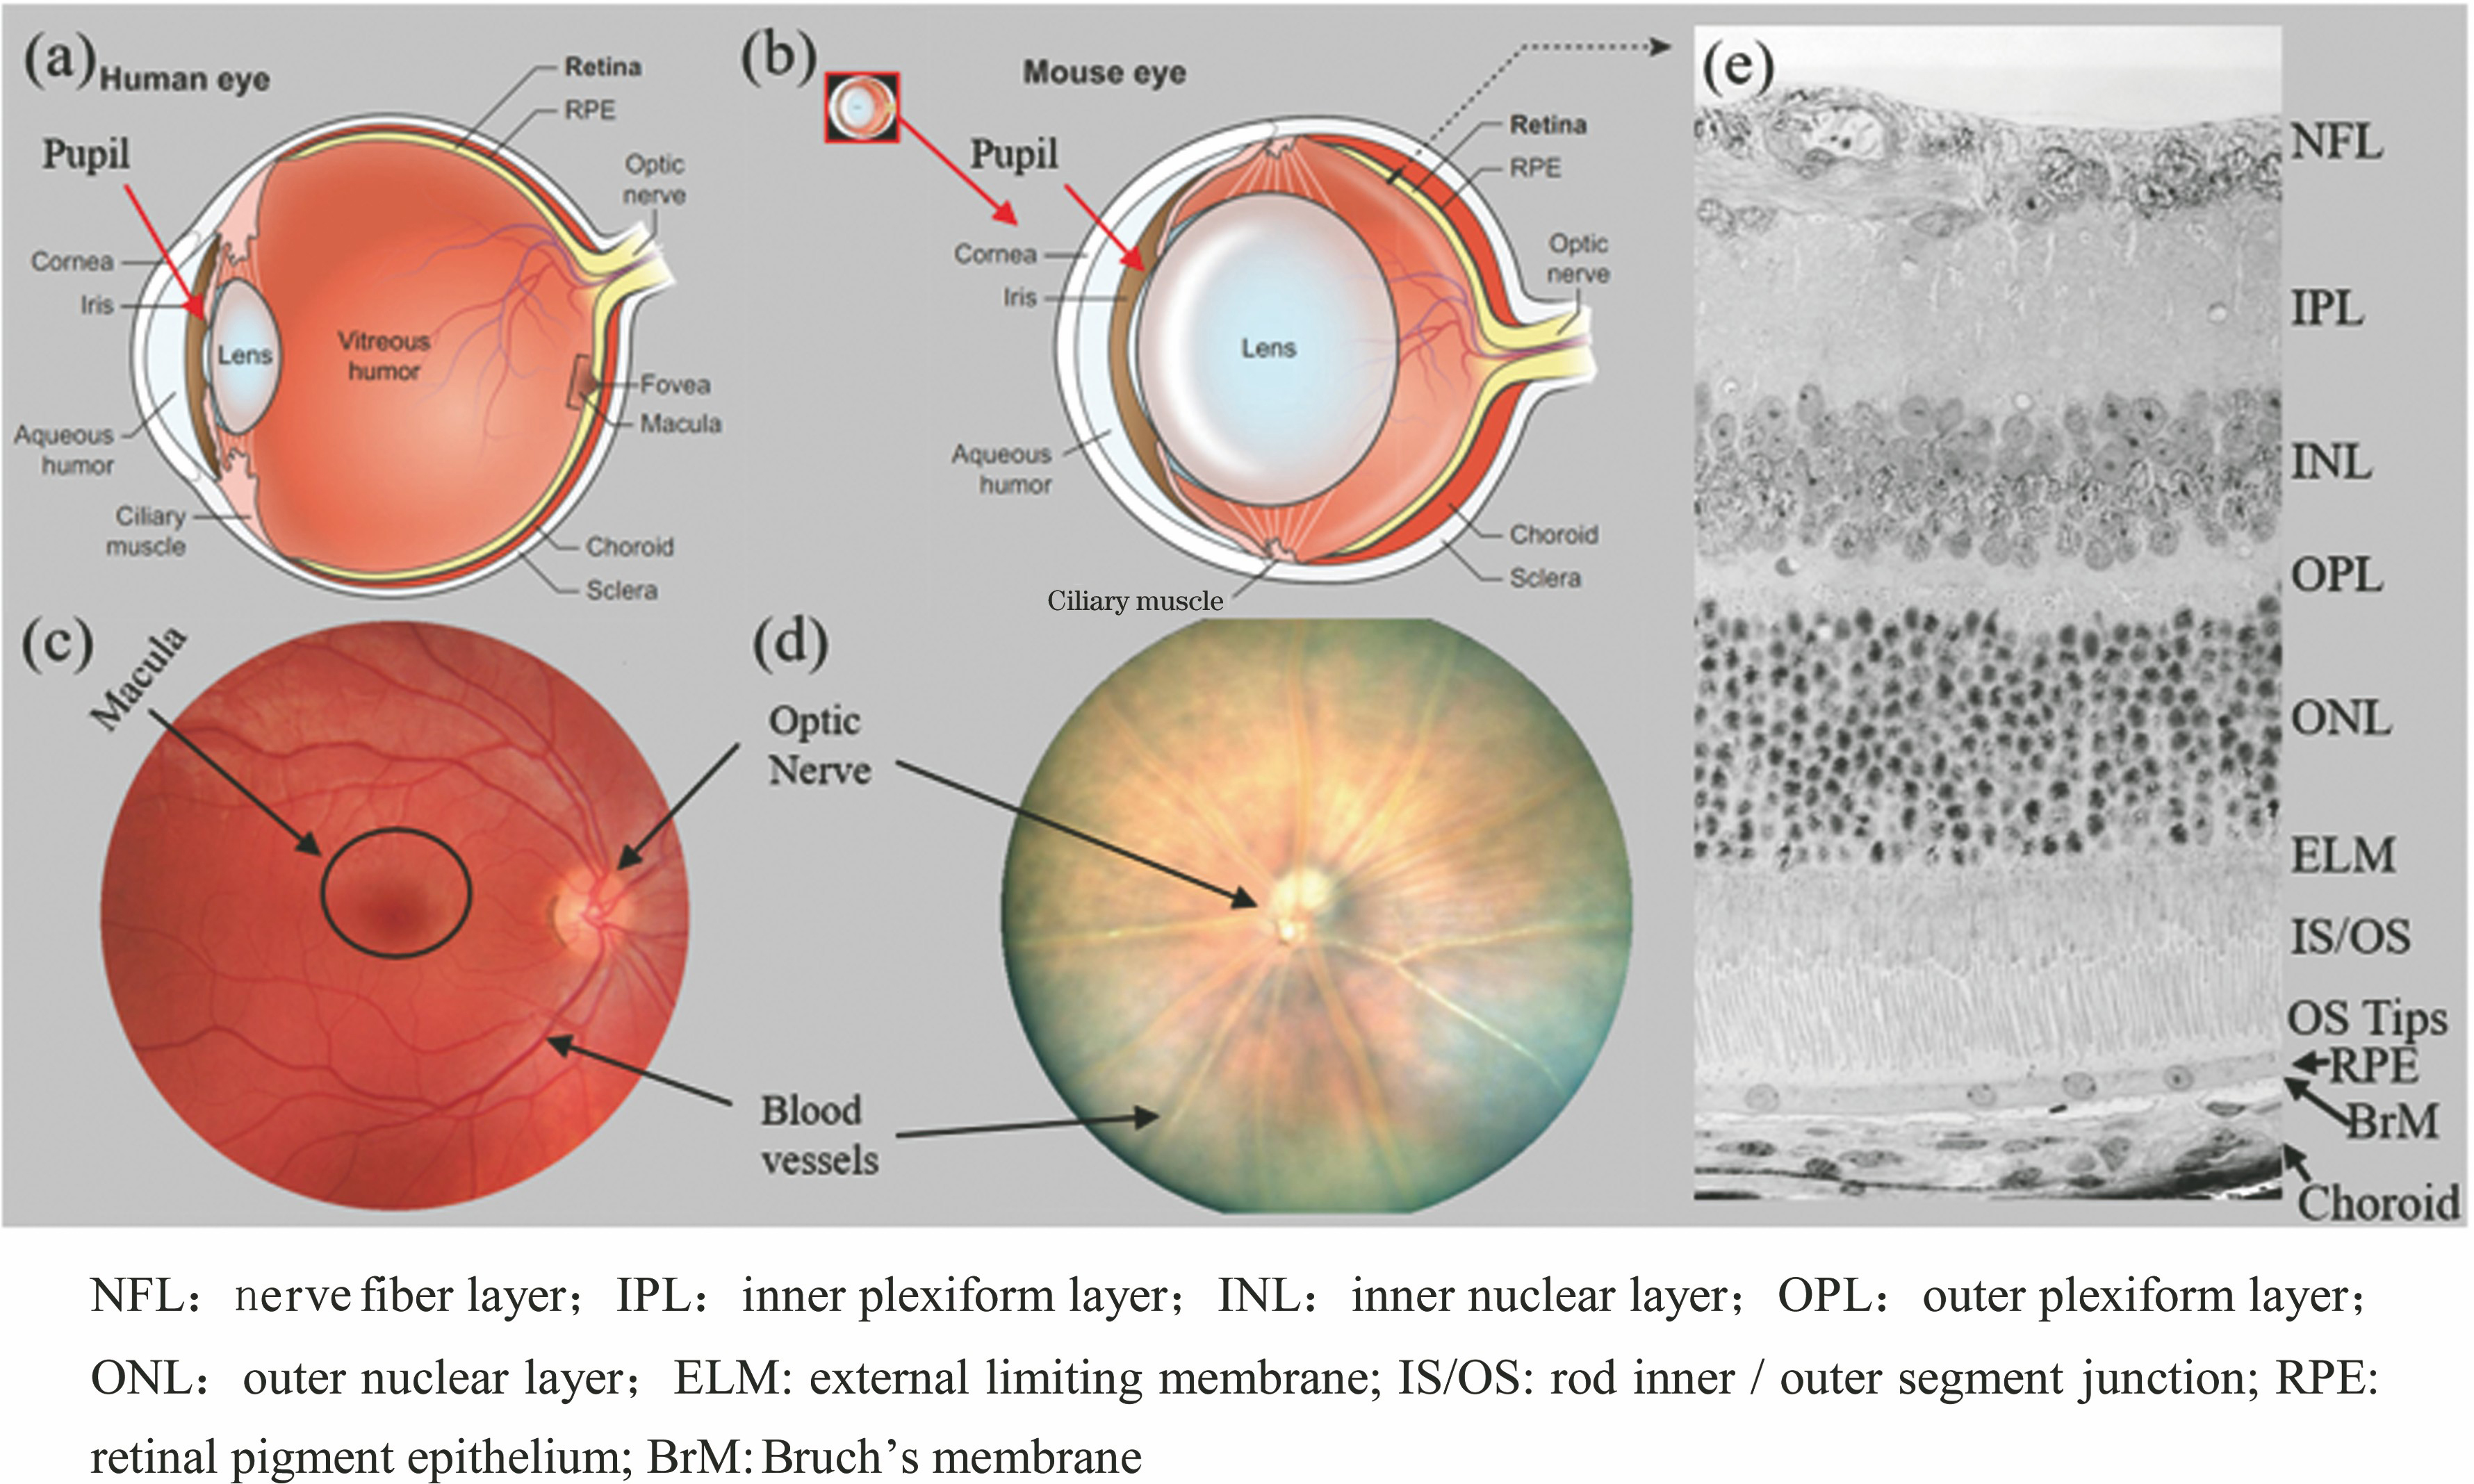 Comparison between human eyeball and mouse eyeball. (a) Diagram of a human eye[21]; (b) diagram of a mouse eye[21]; (c) fundus image for human retina[22]; (d) fundus image for mouse retina[23]; (e) histology slice of a mouse retina